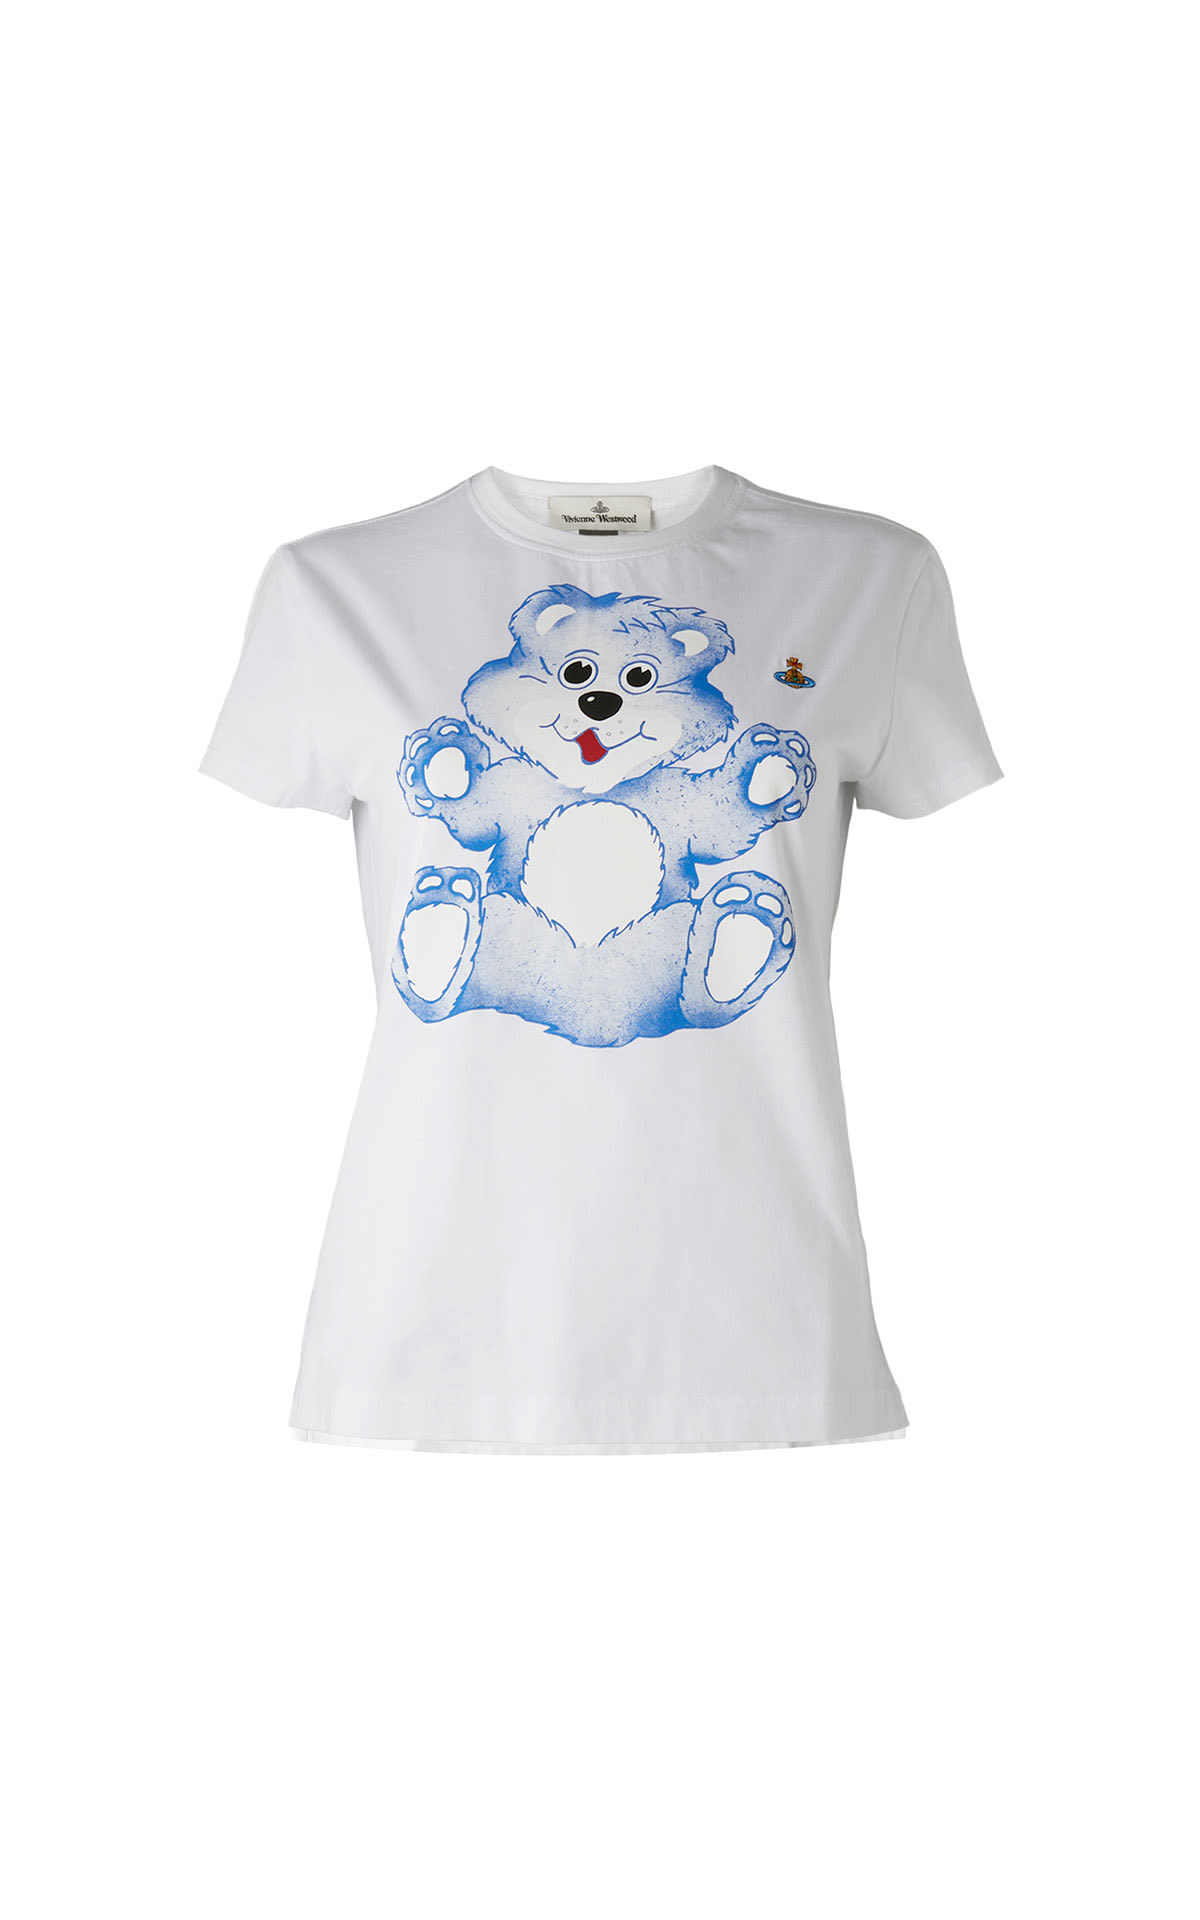 Vivienne Westwood Teddy bear t-shirt from Bicester Village